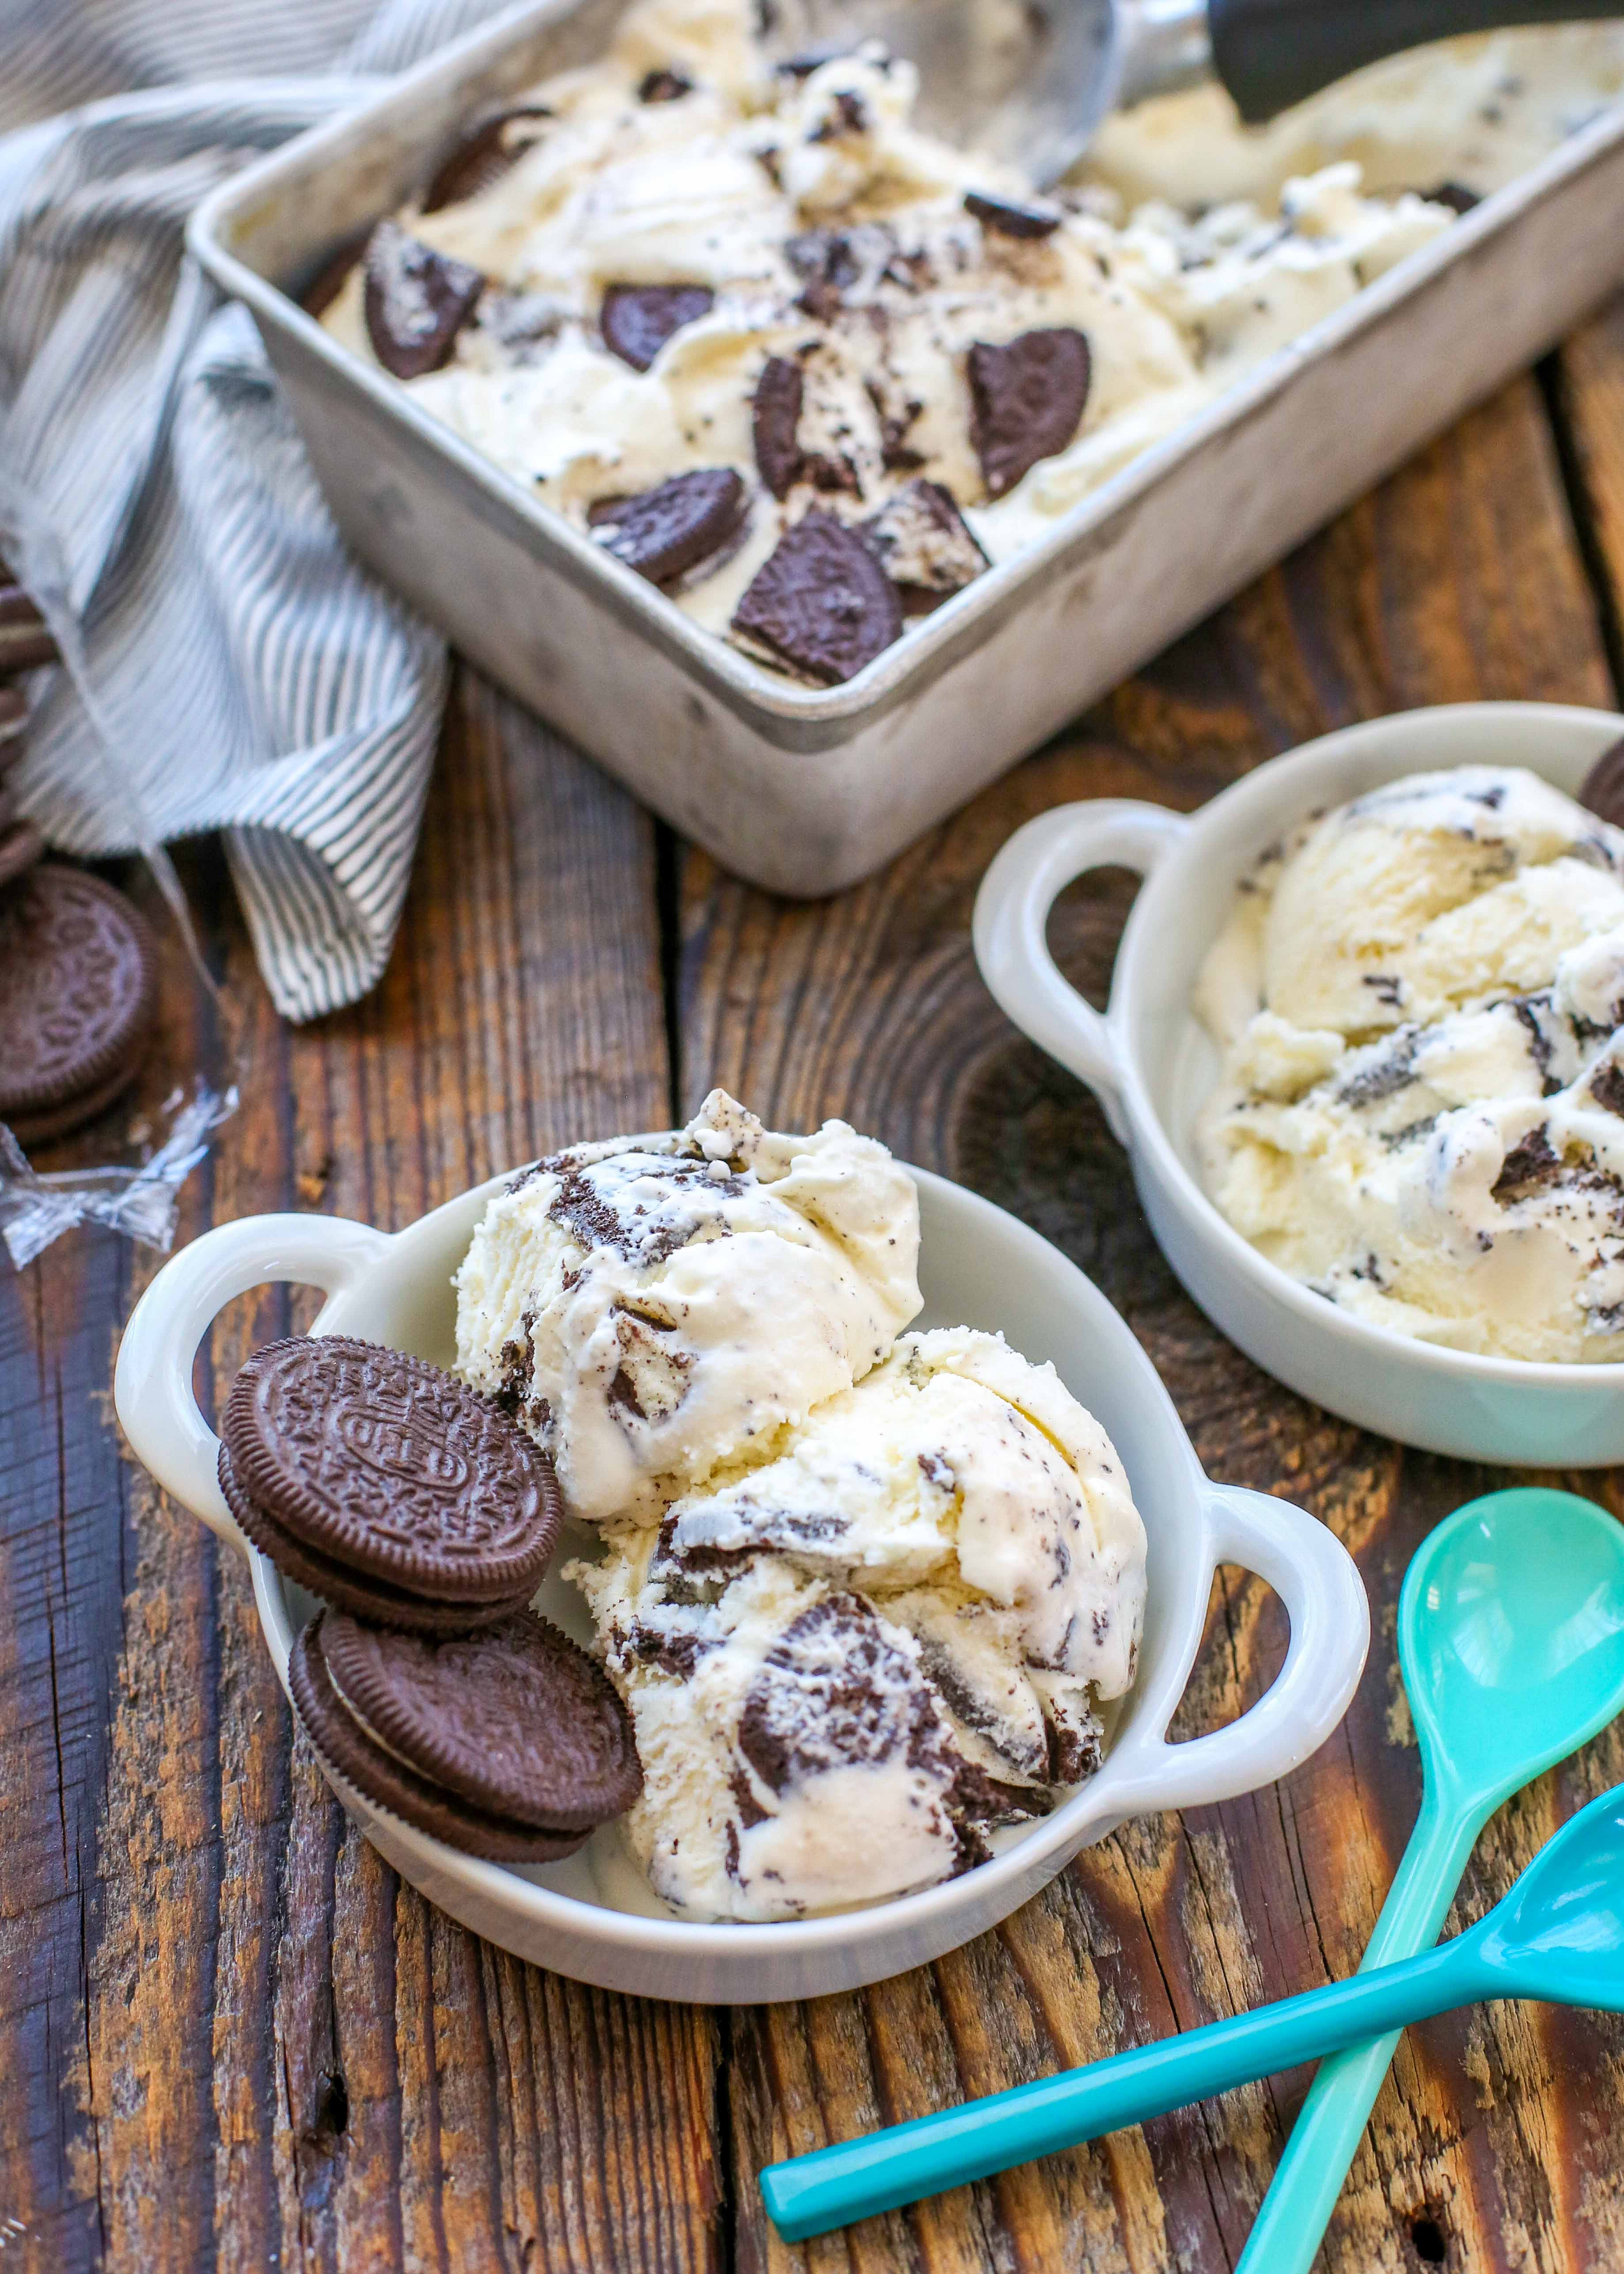 https://barefeetinthekitchen.com/wp-content/uploads/2018/07/Cookies-and-Cream-Ice-Cream-edit-2-1-of-1.jpg